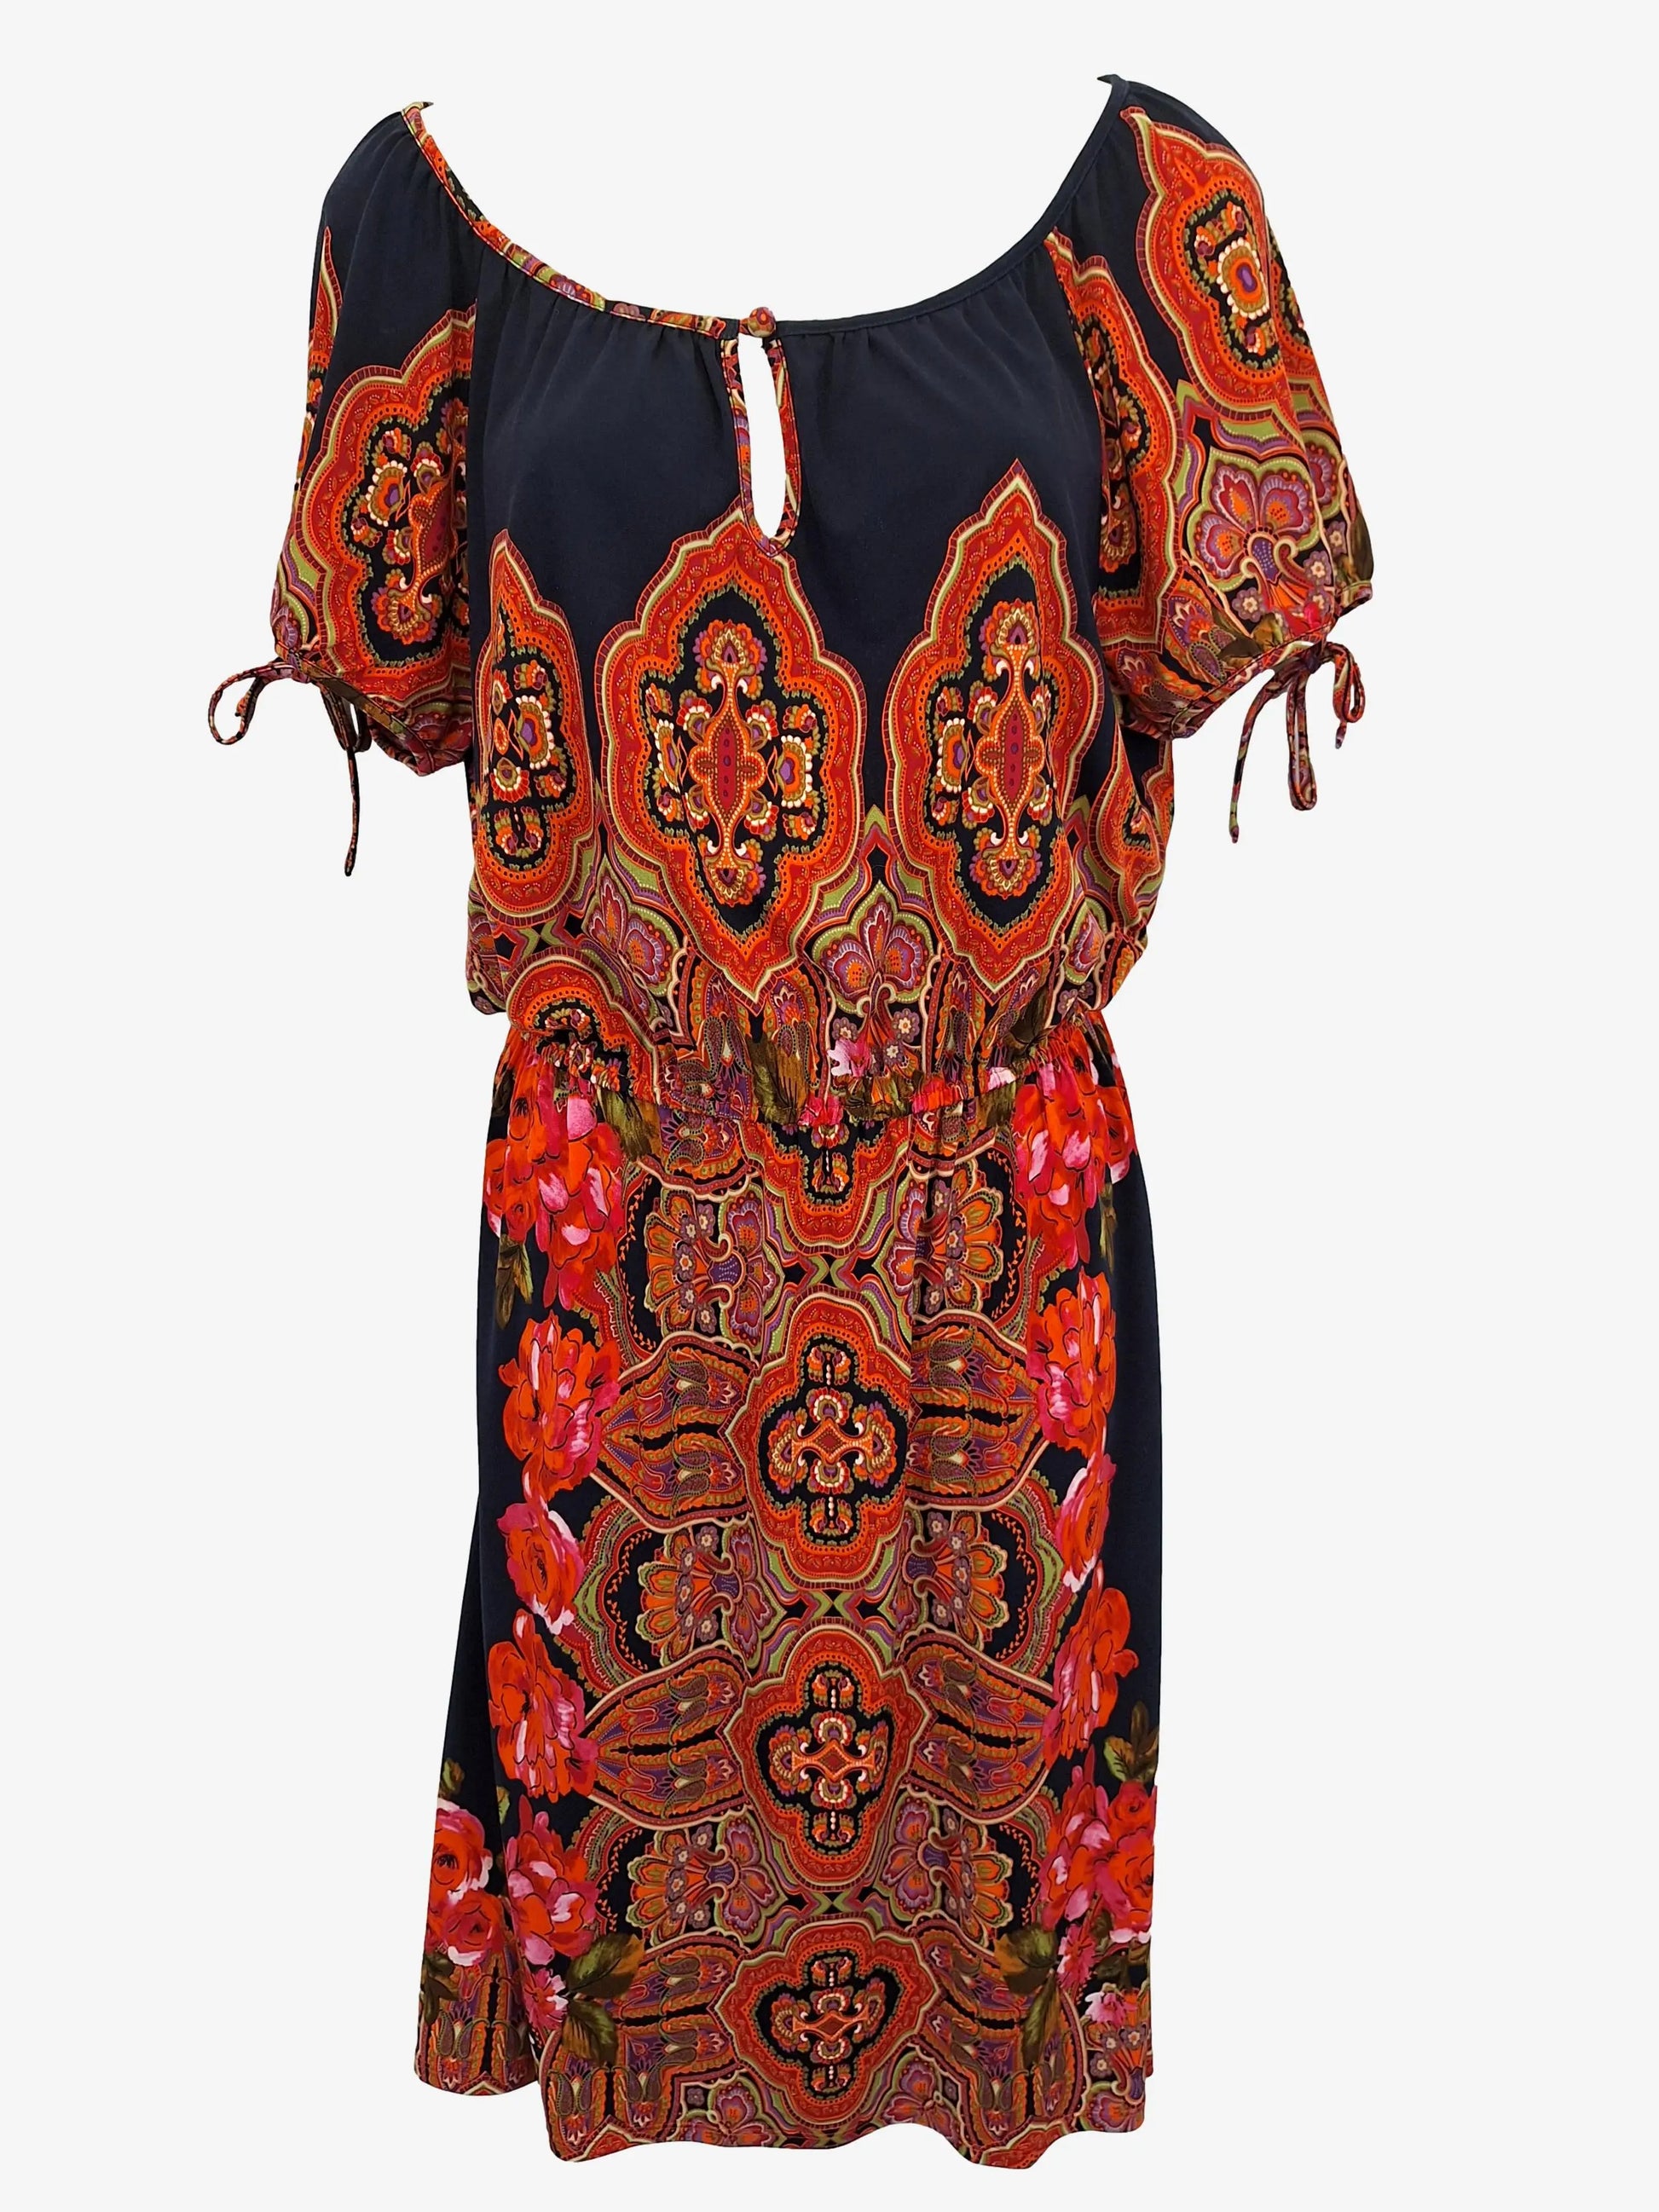 Leona Edmiston Navy Boho Midi Dress Size 10 by SwapUp-Online Second Hand Store-Online Thrift Store